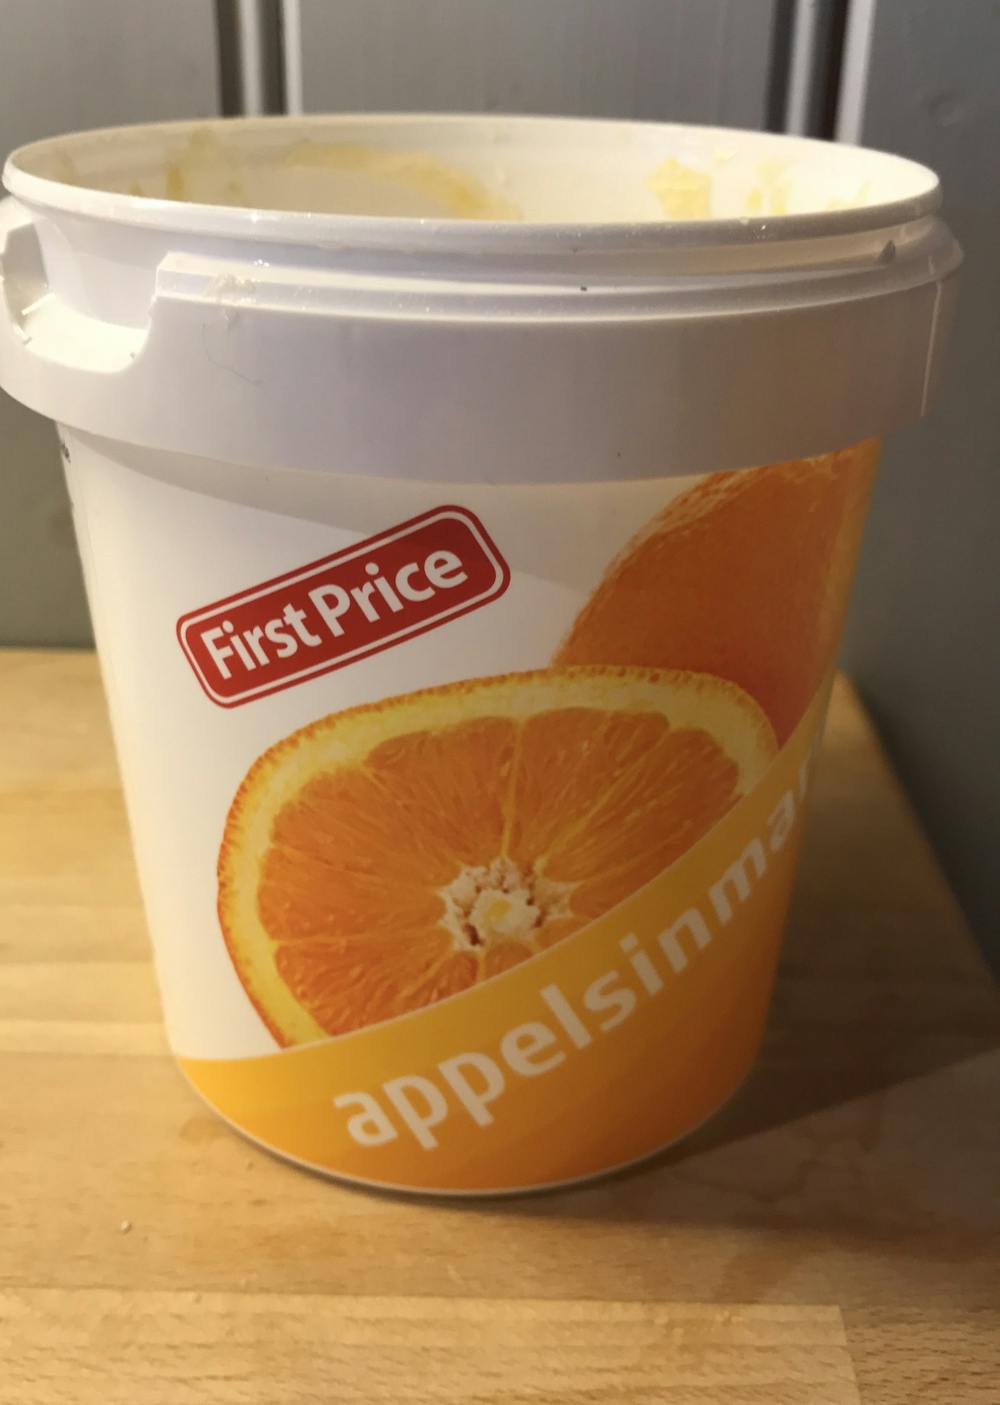 Appelsinmarmelade, First price